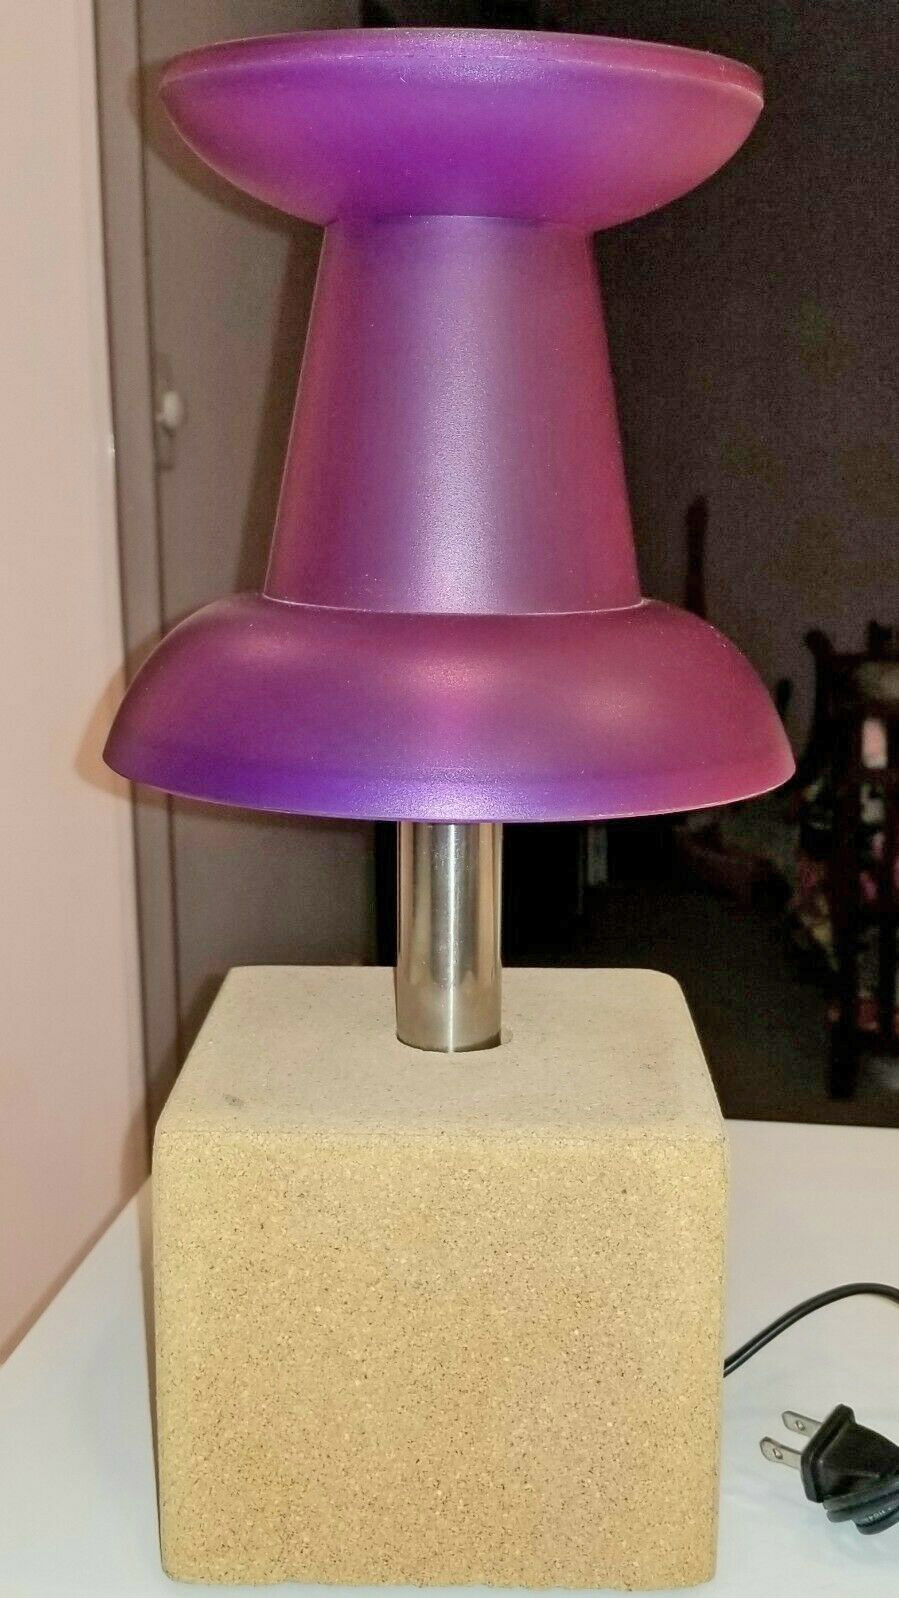 Giant Thumbtack Lamp - Pushpin tack lamp